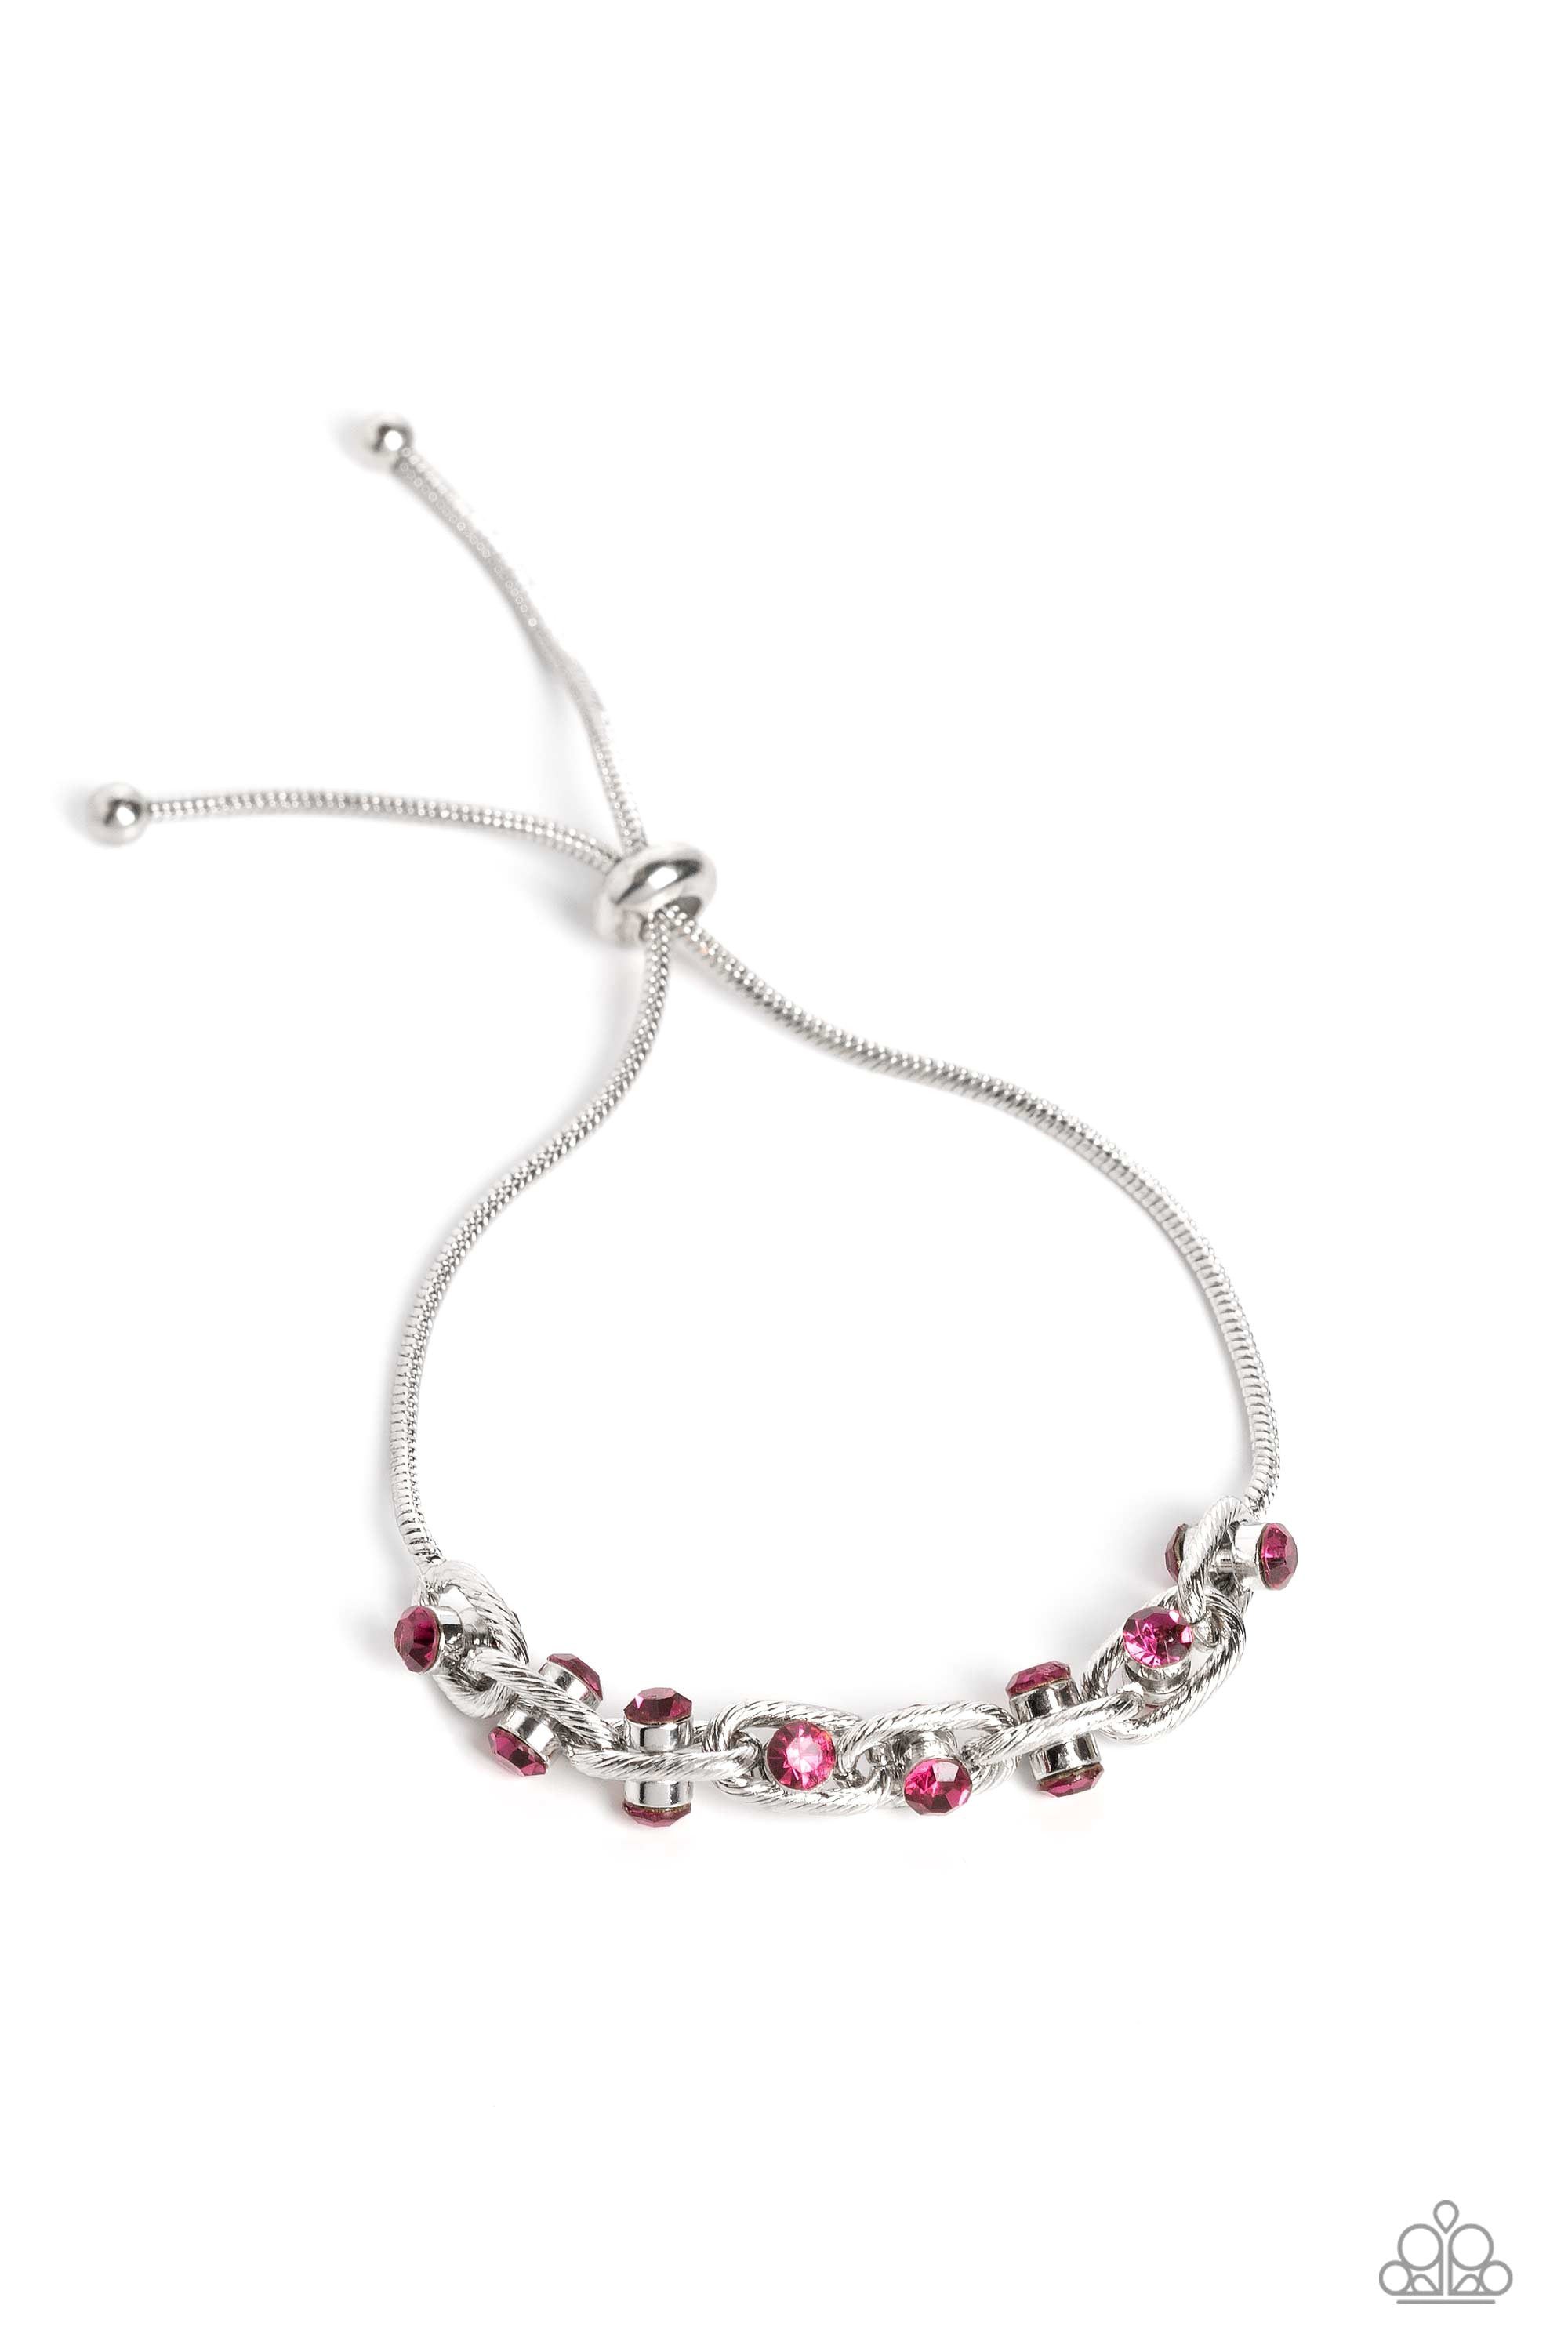 Intertwined Illusion Pink Rhinestone Slide Bracelet - Paparazzi Accessories- lightbox - CarasShop.com - $5 Jewelry by Cara Jewels